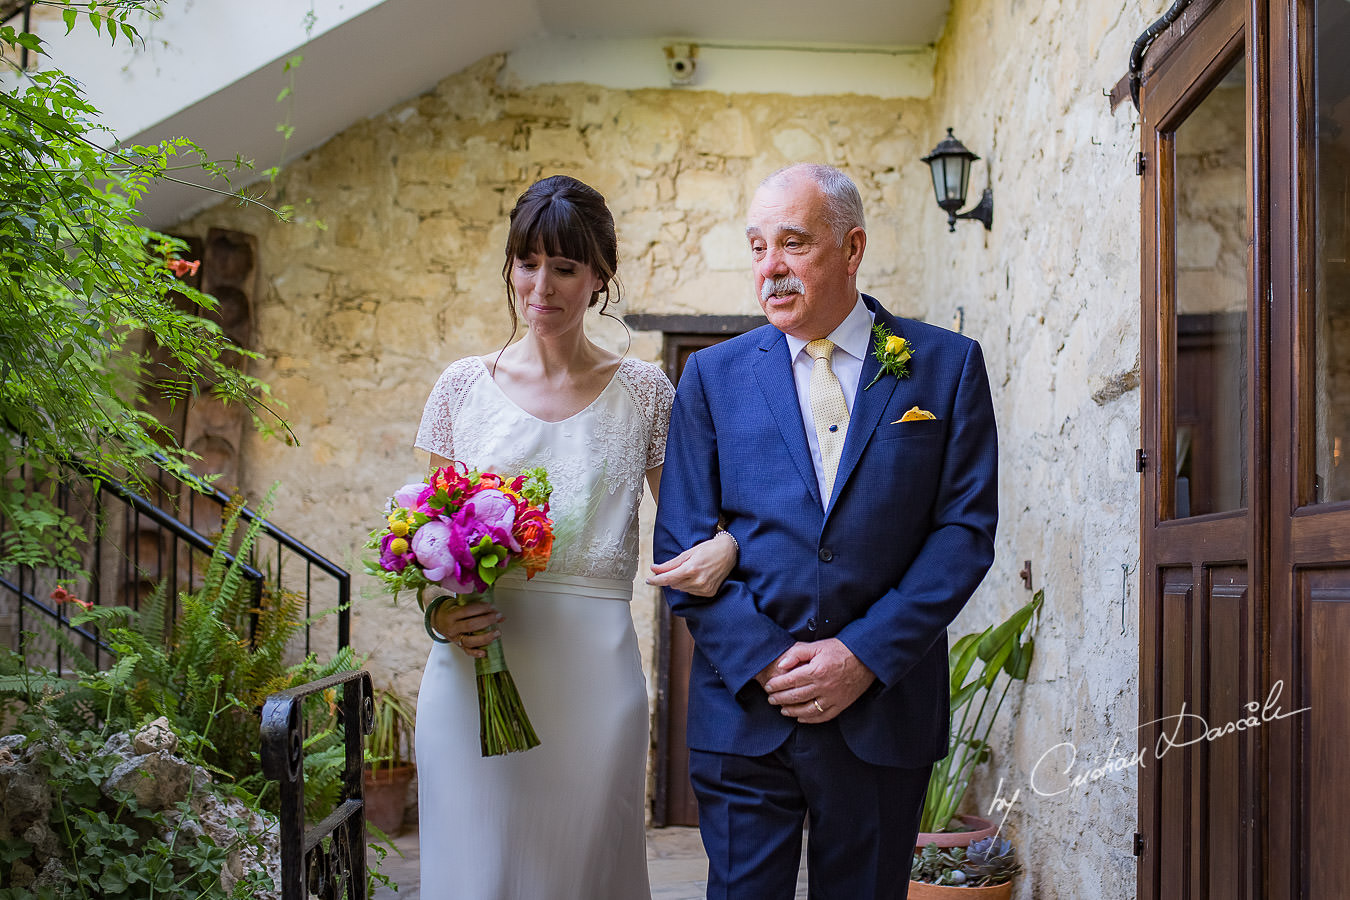 A beautiful wedding day at the Vasilias Nikoklis Inn in Paphos, captured by Cristian Dascalu. Bride's arrival.